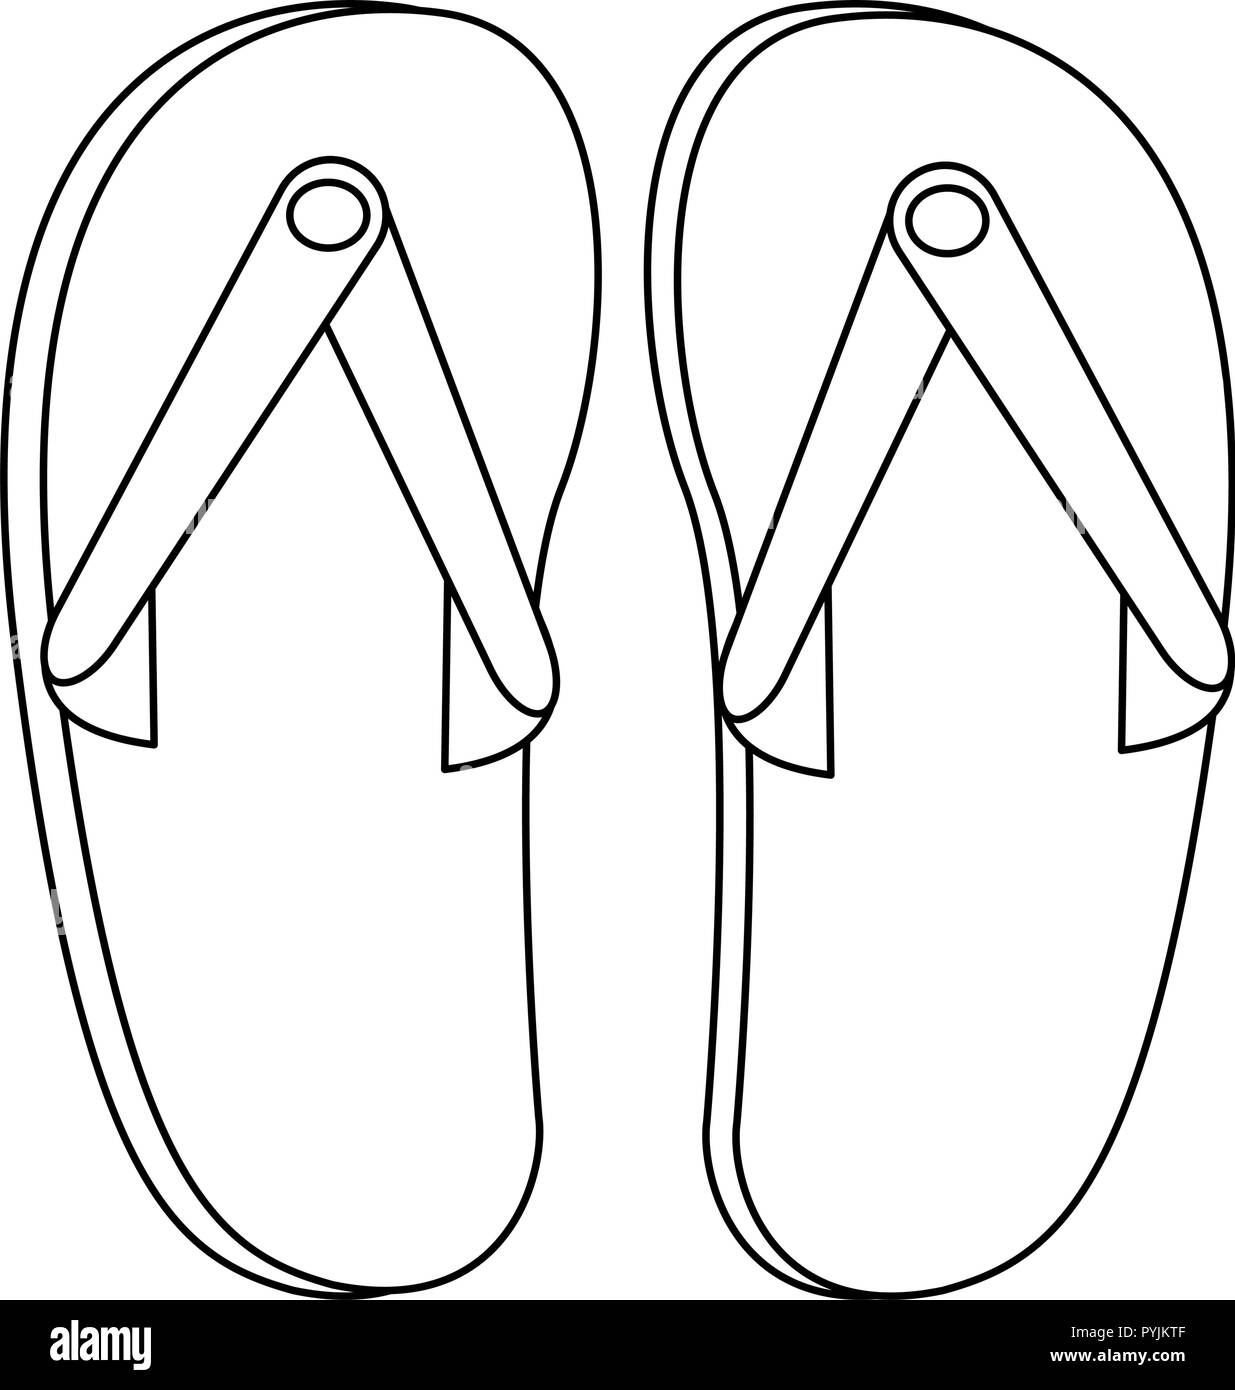 Flip flop sandals cartoon vector illustration graphic design Stock ...